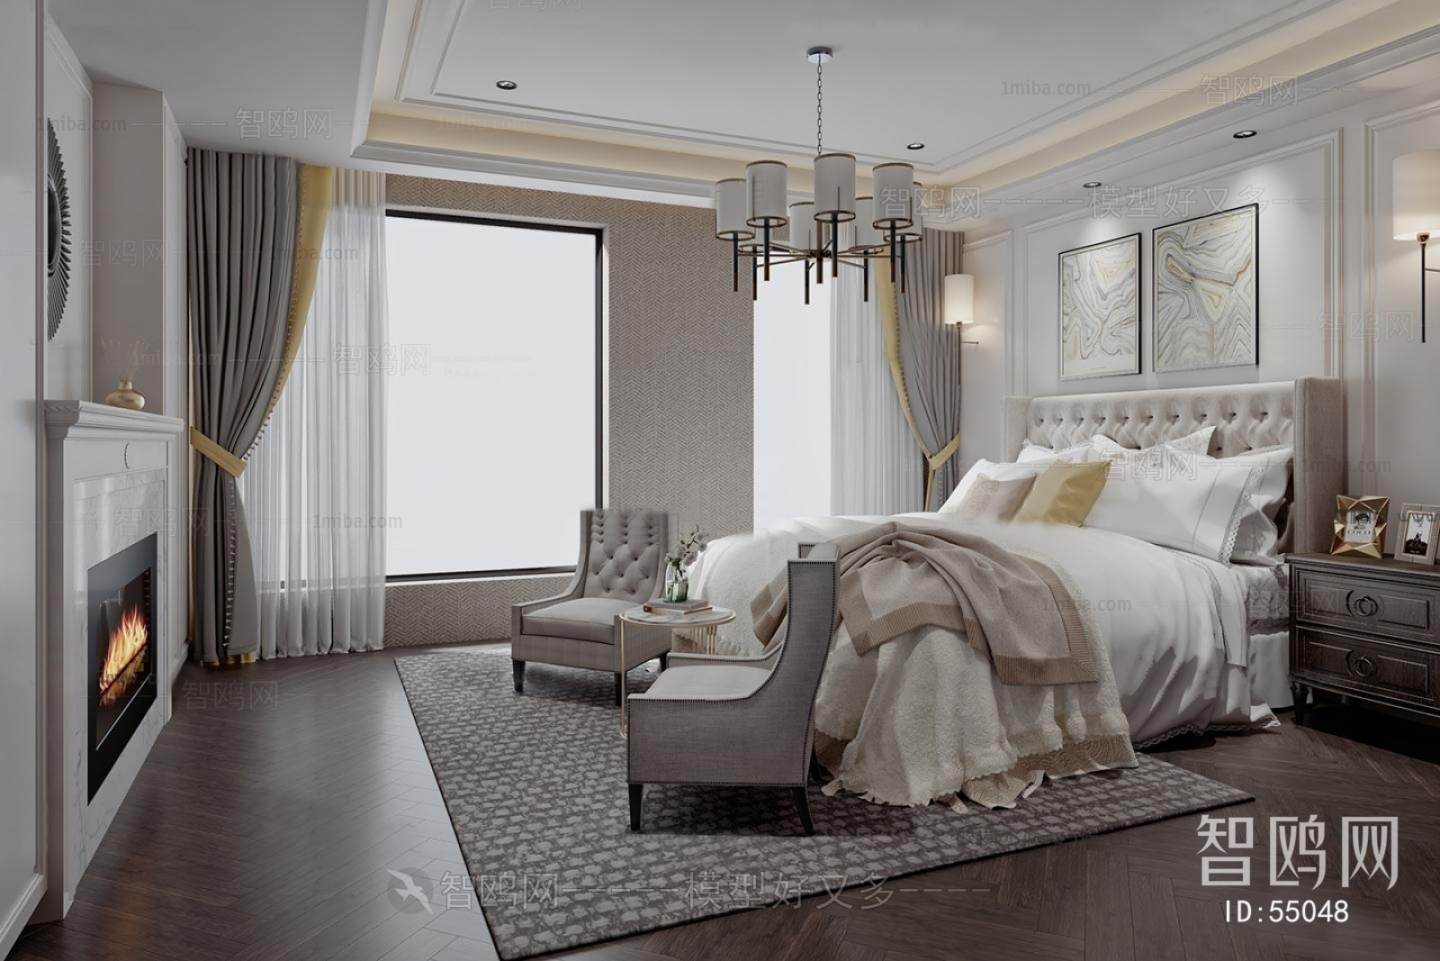 Modern American Style Bedroom